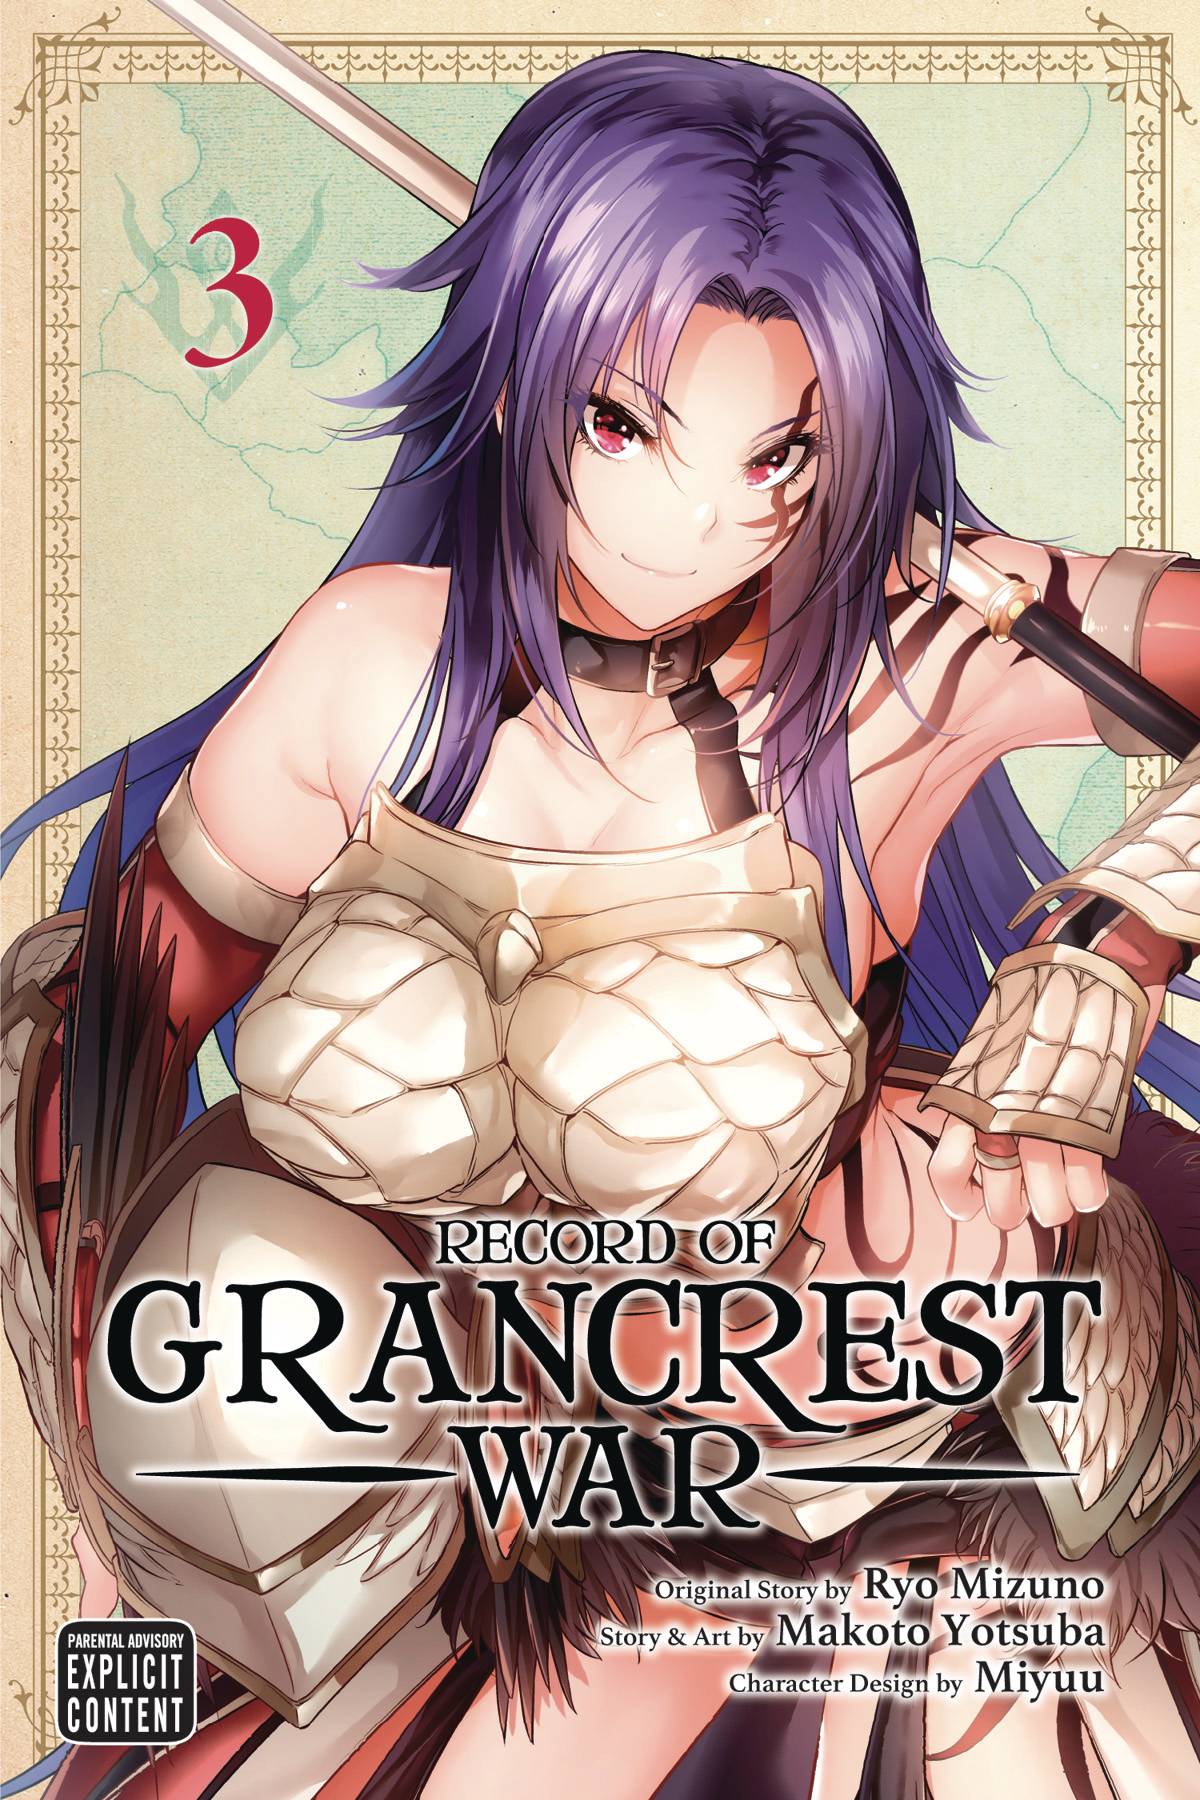 Record of Grancrest War Manga Volume 3 (Mature)